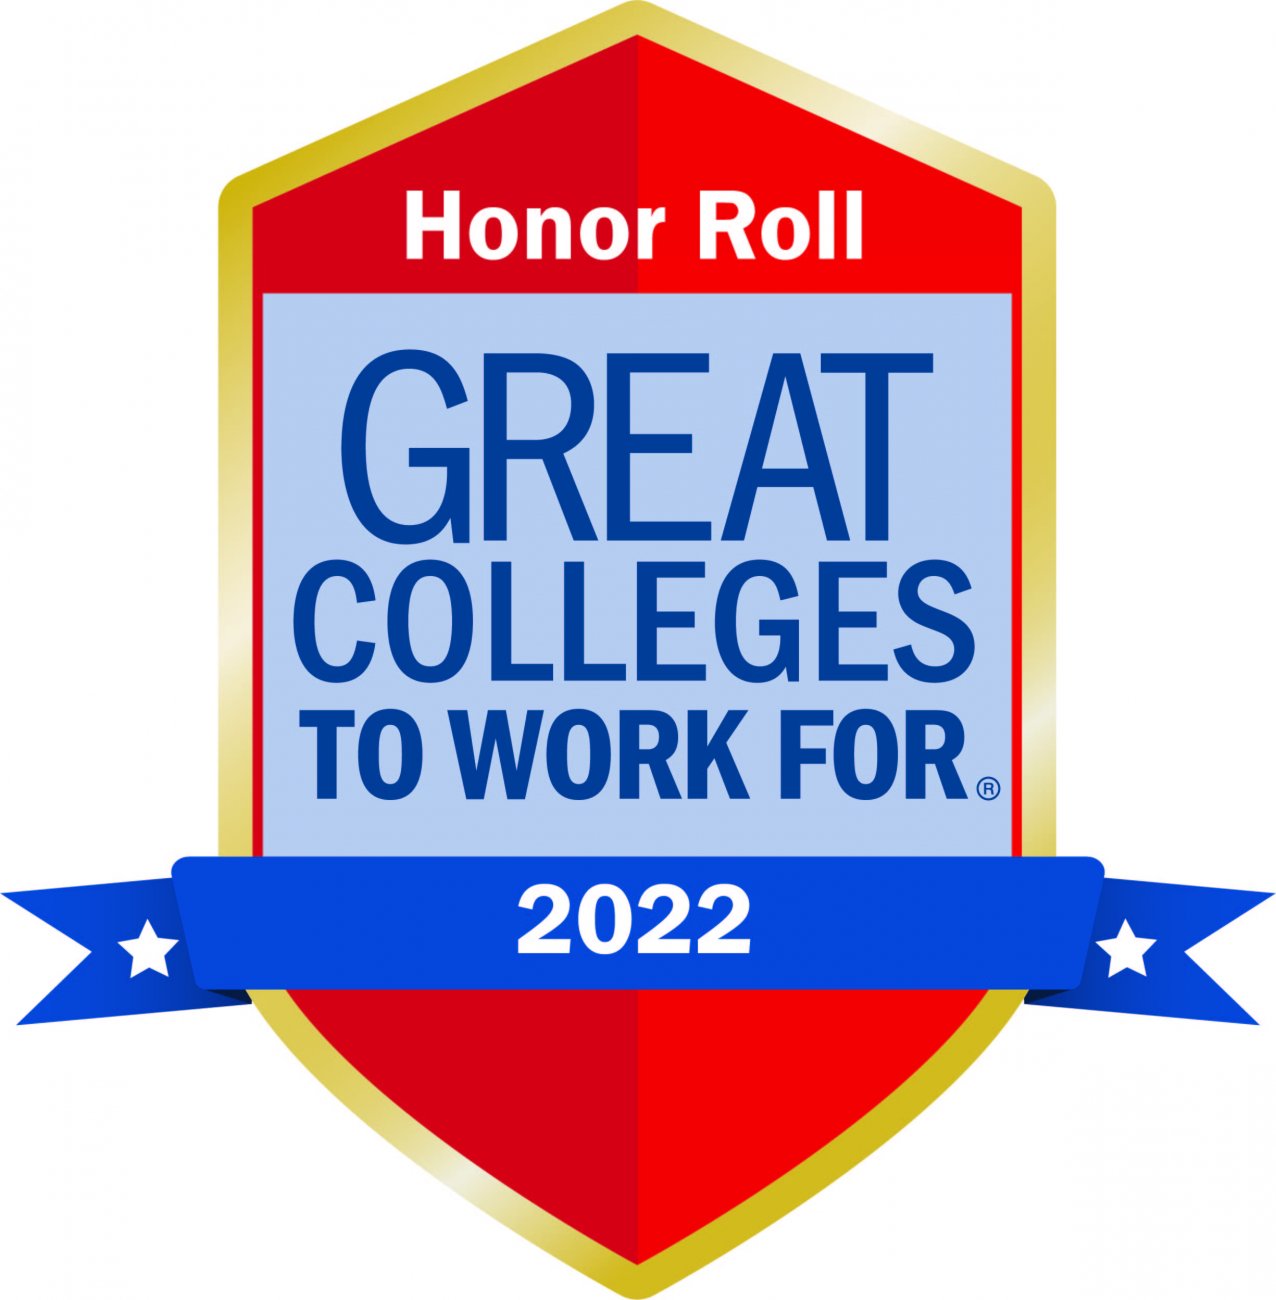 "Honor Roll Logo"